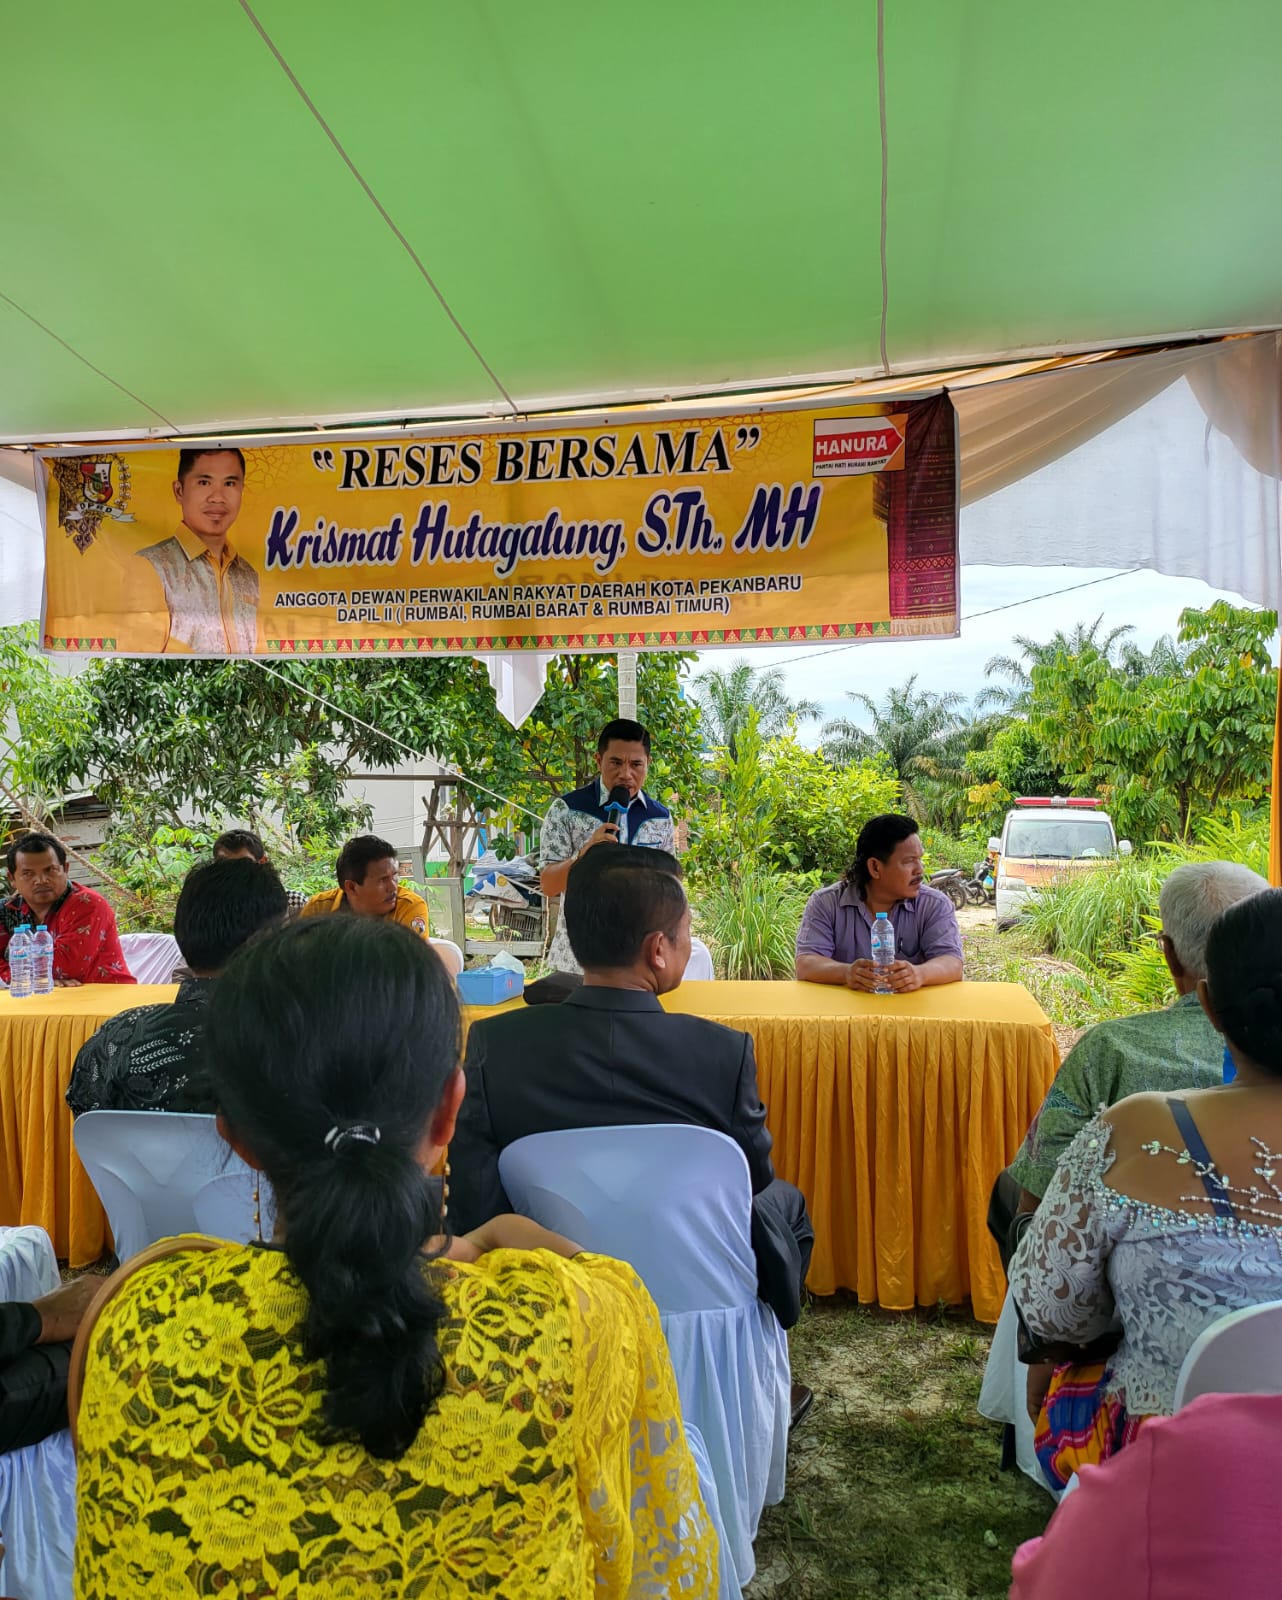 Anggota DPRD Kota Pekanbaru Krismat Hutagalung saat melaksanakan reses